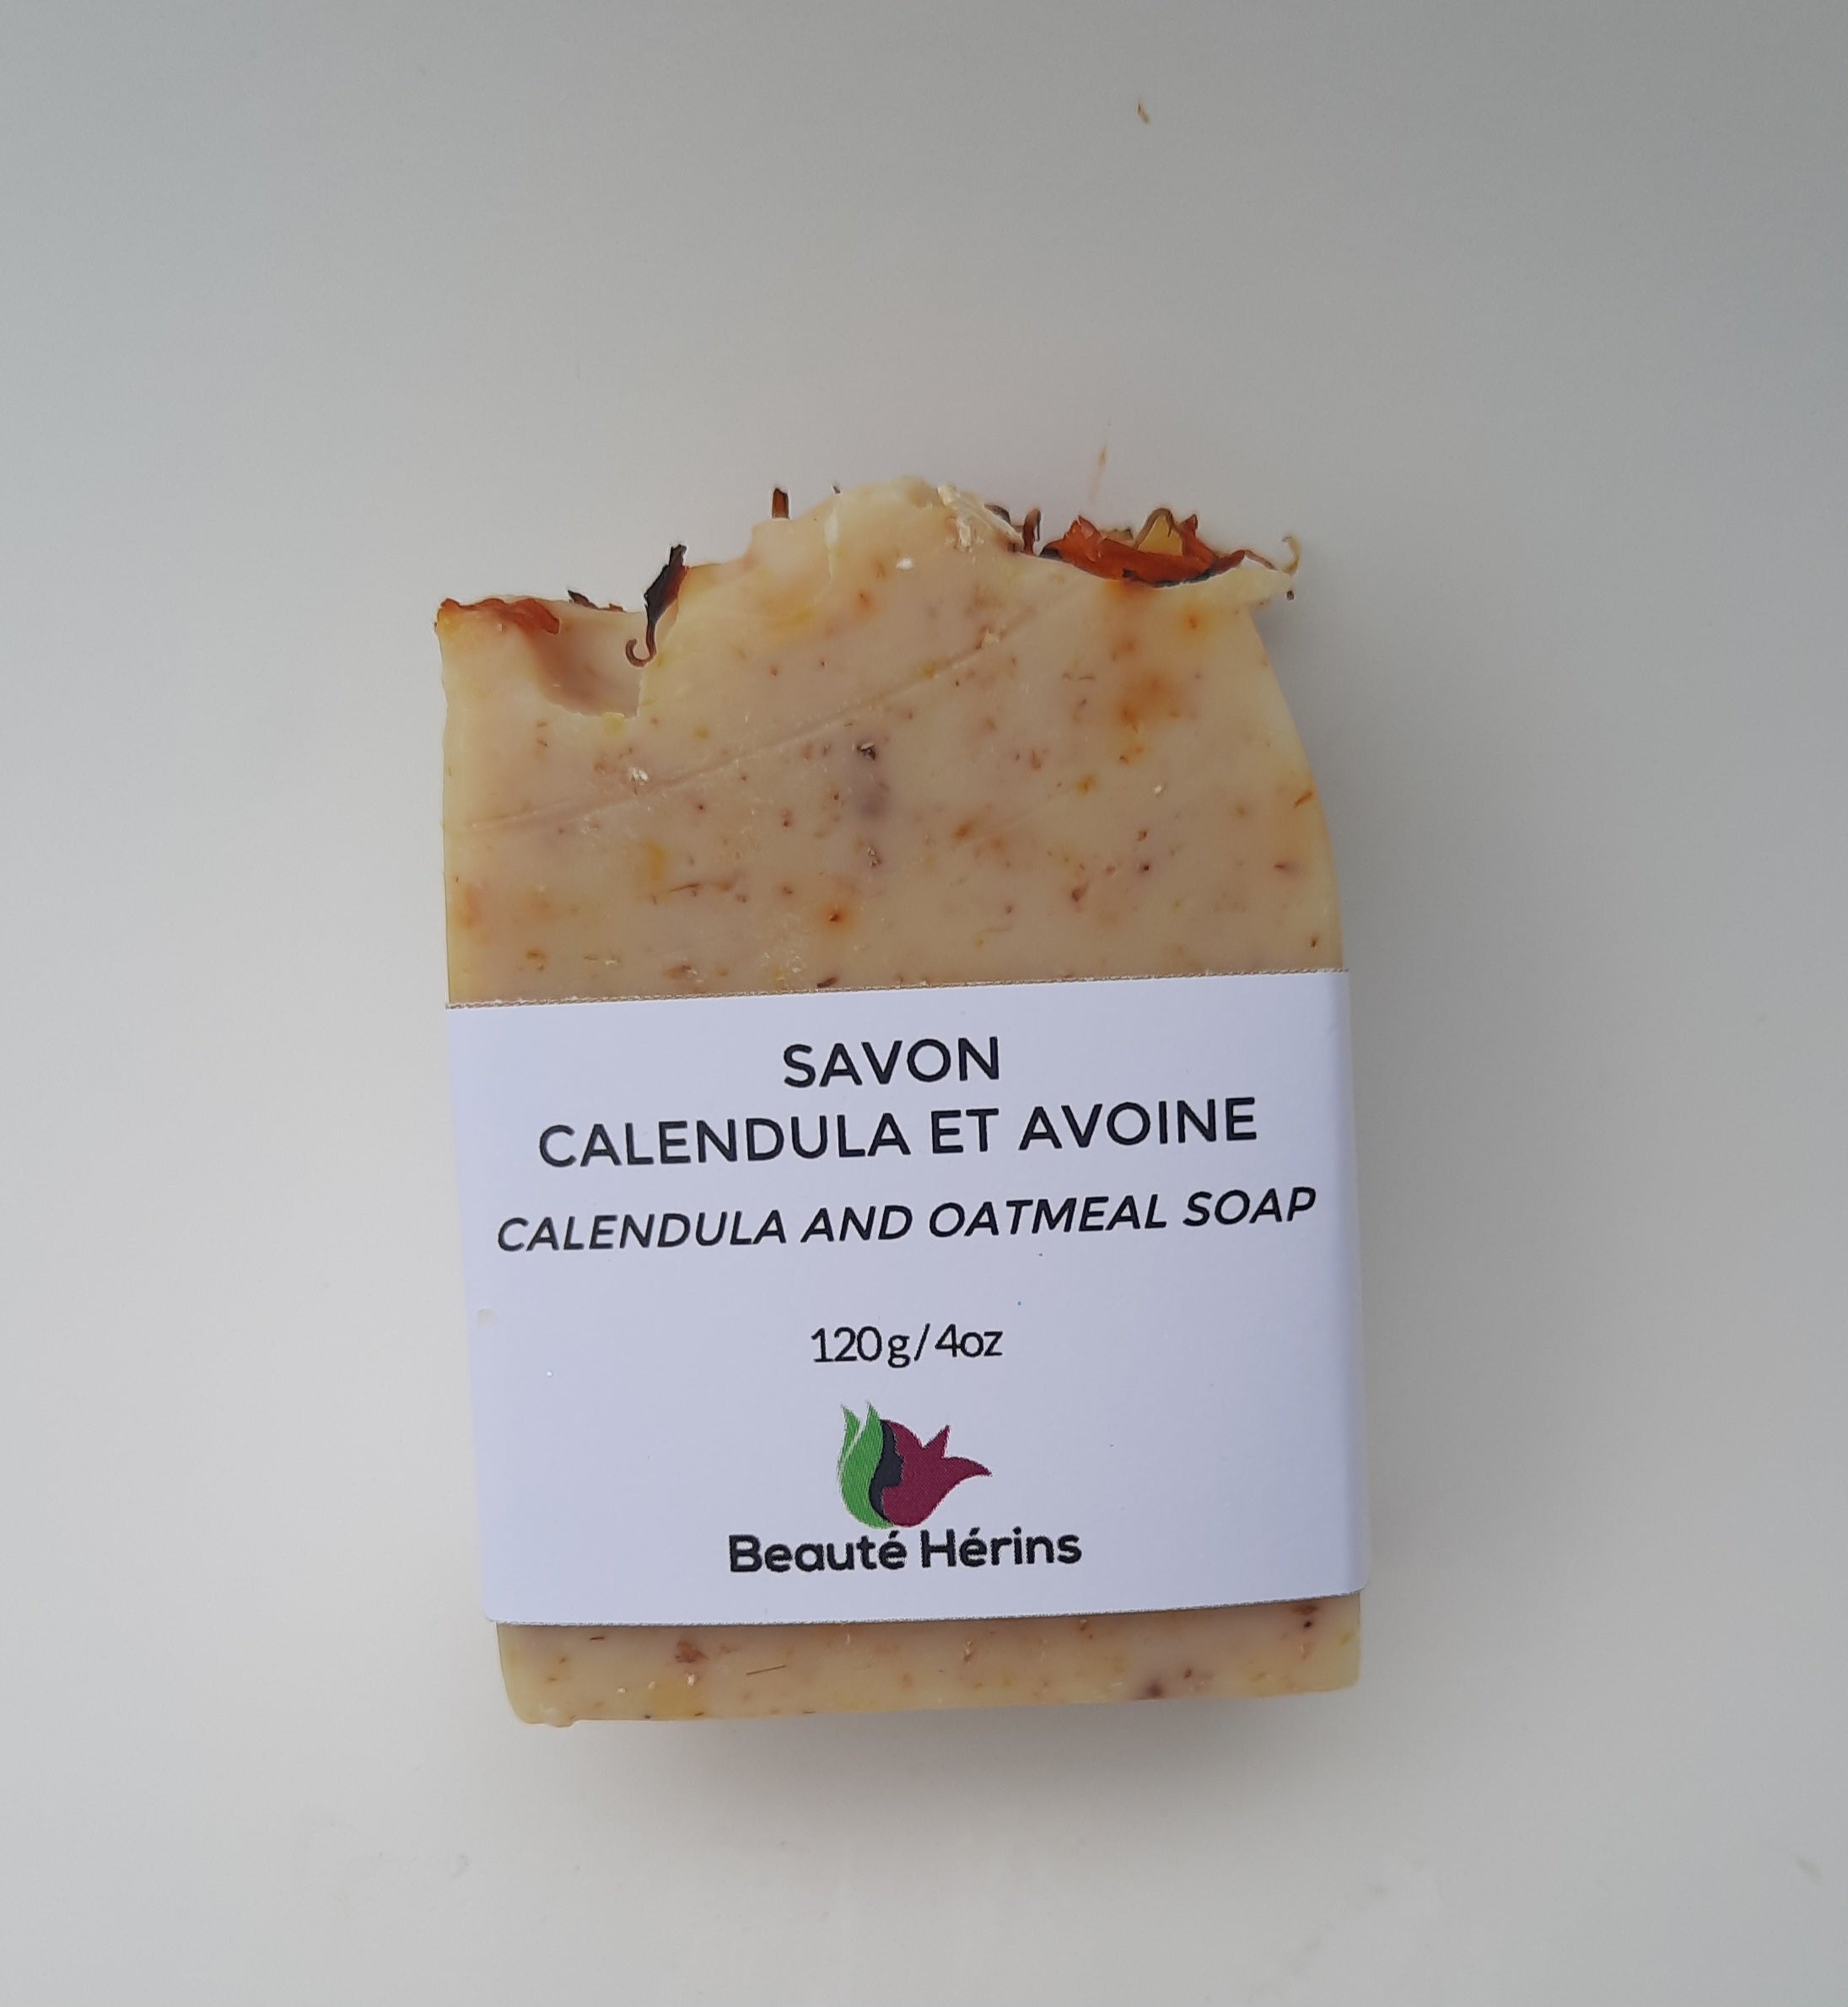 Calendula and oatmeal soap - Unscented - 120g